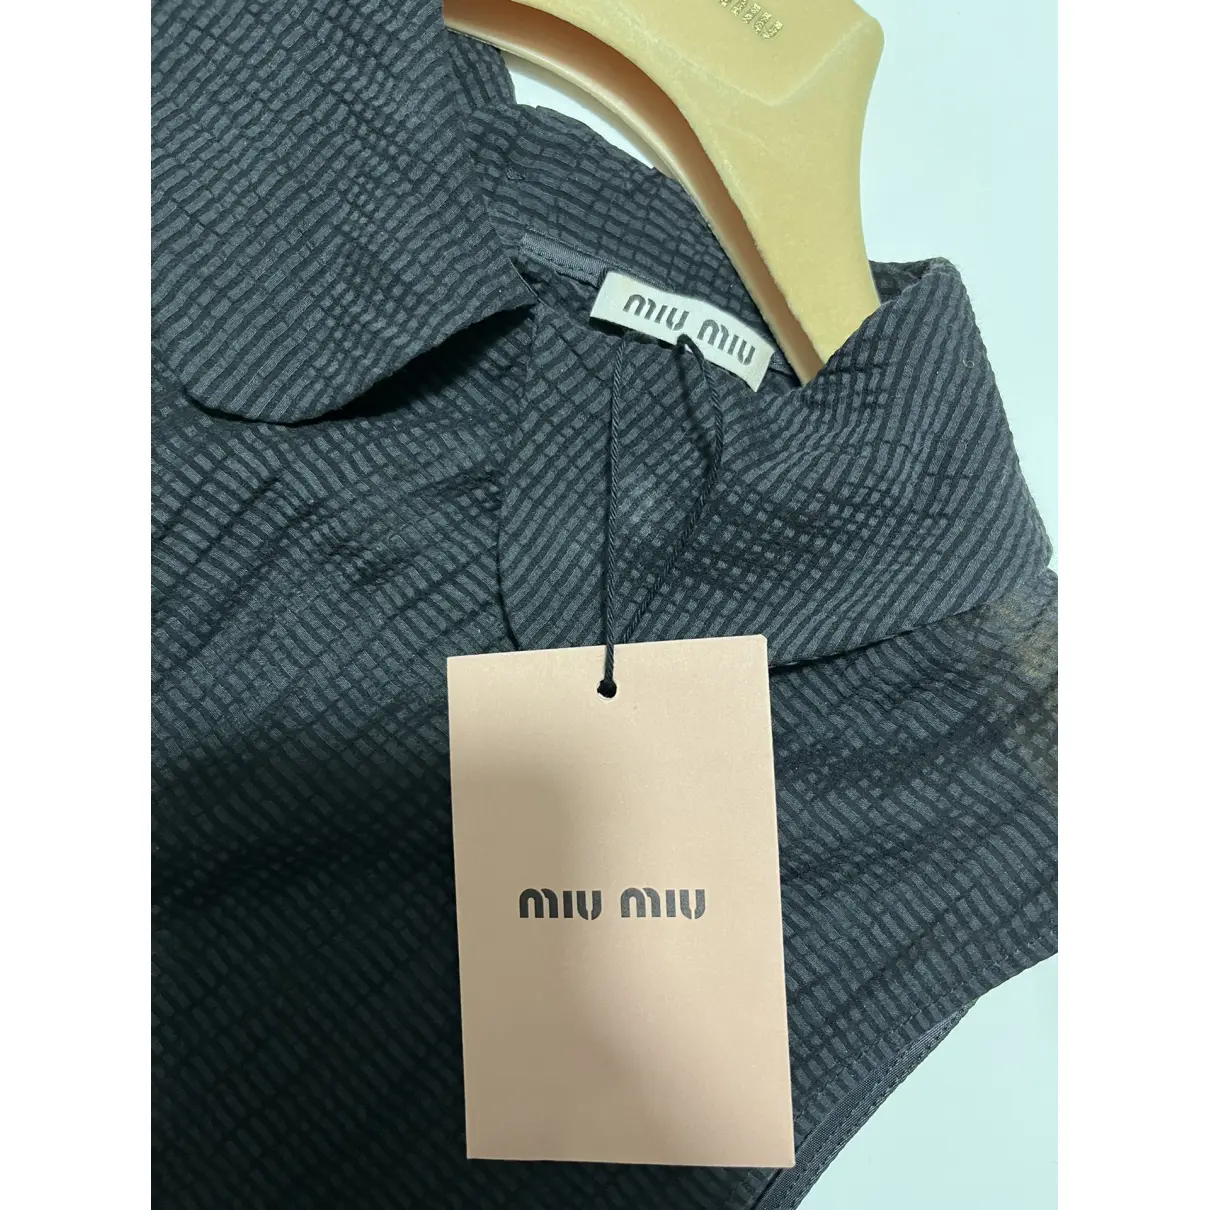 Buy Miu Miu Silk corset online